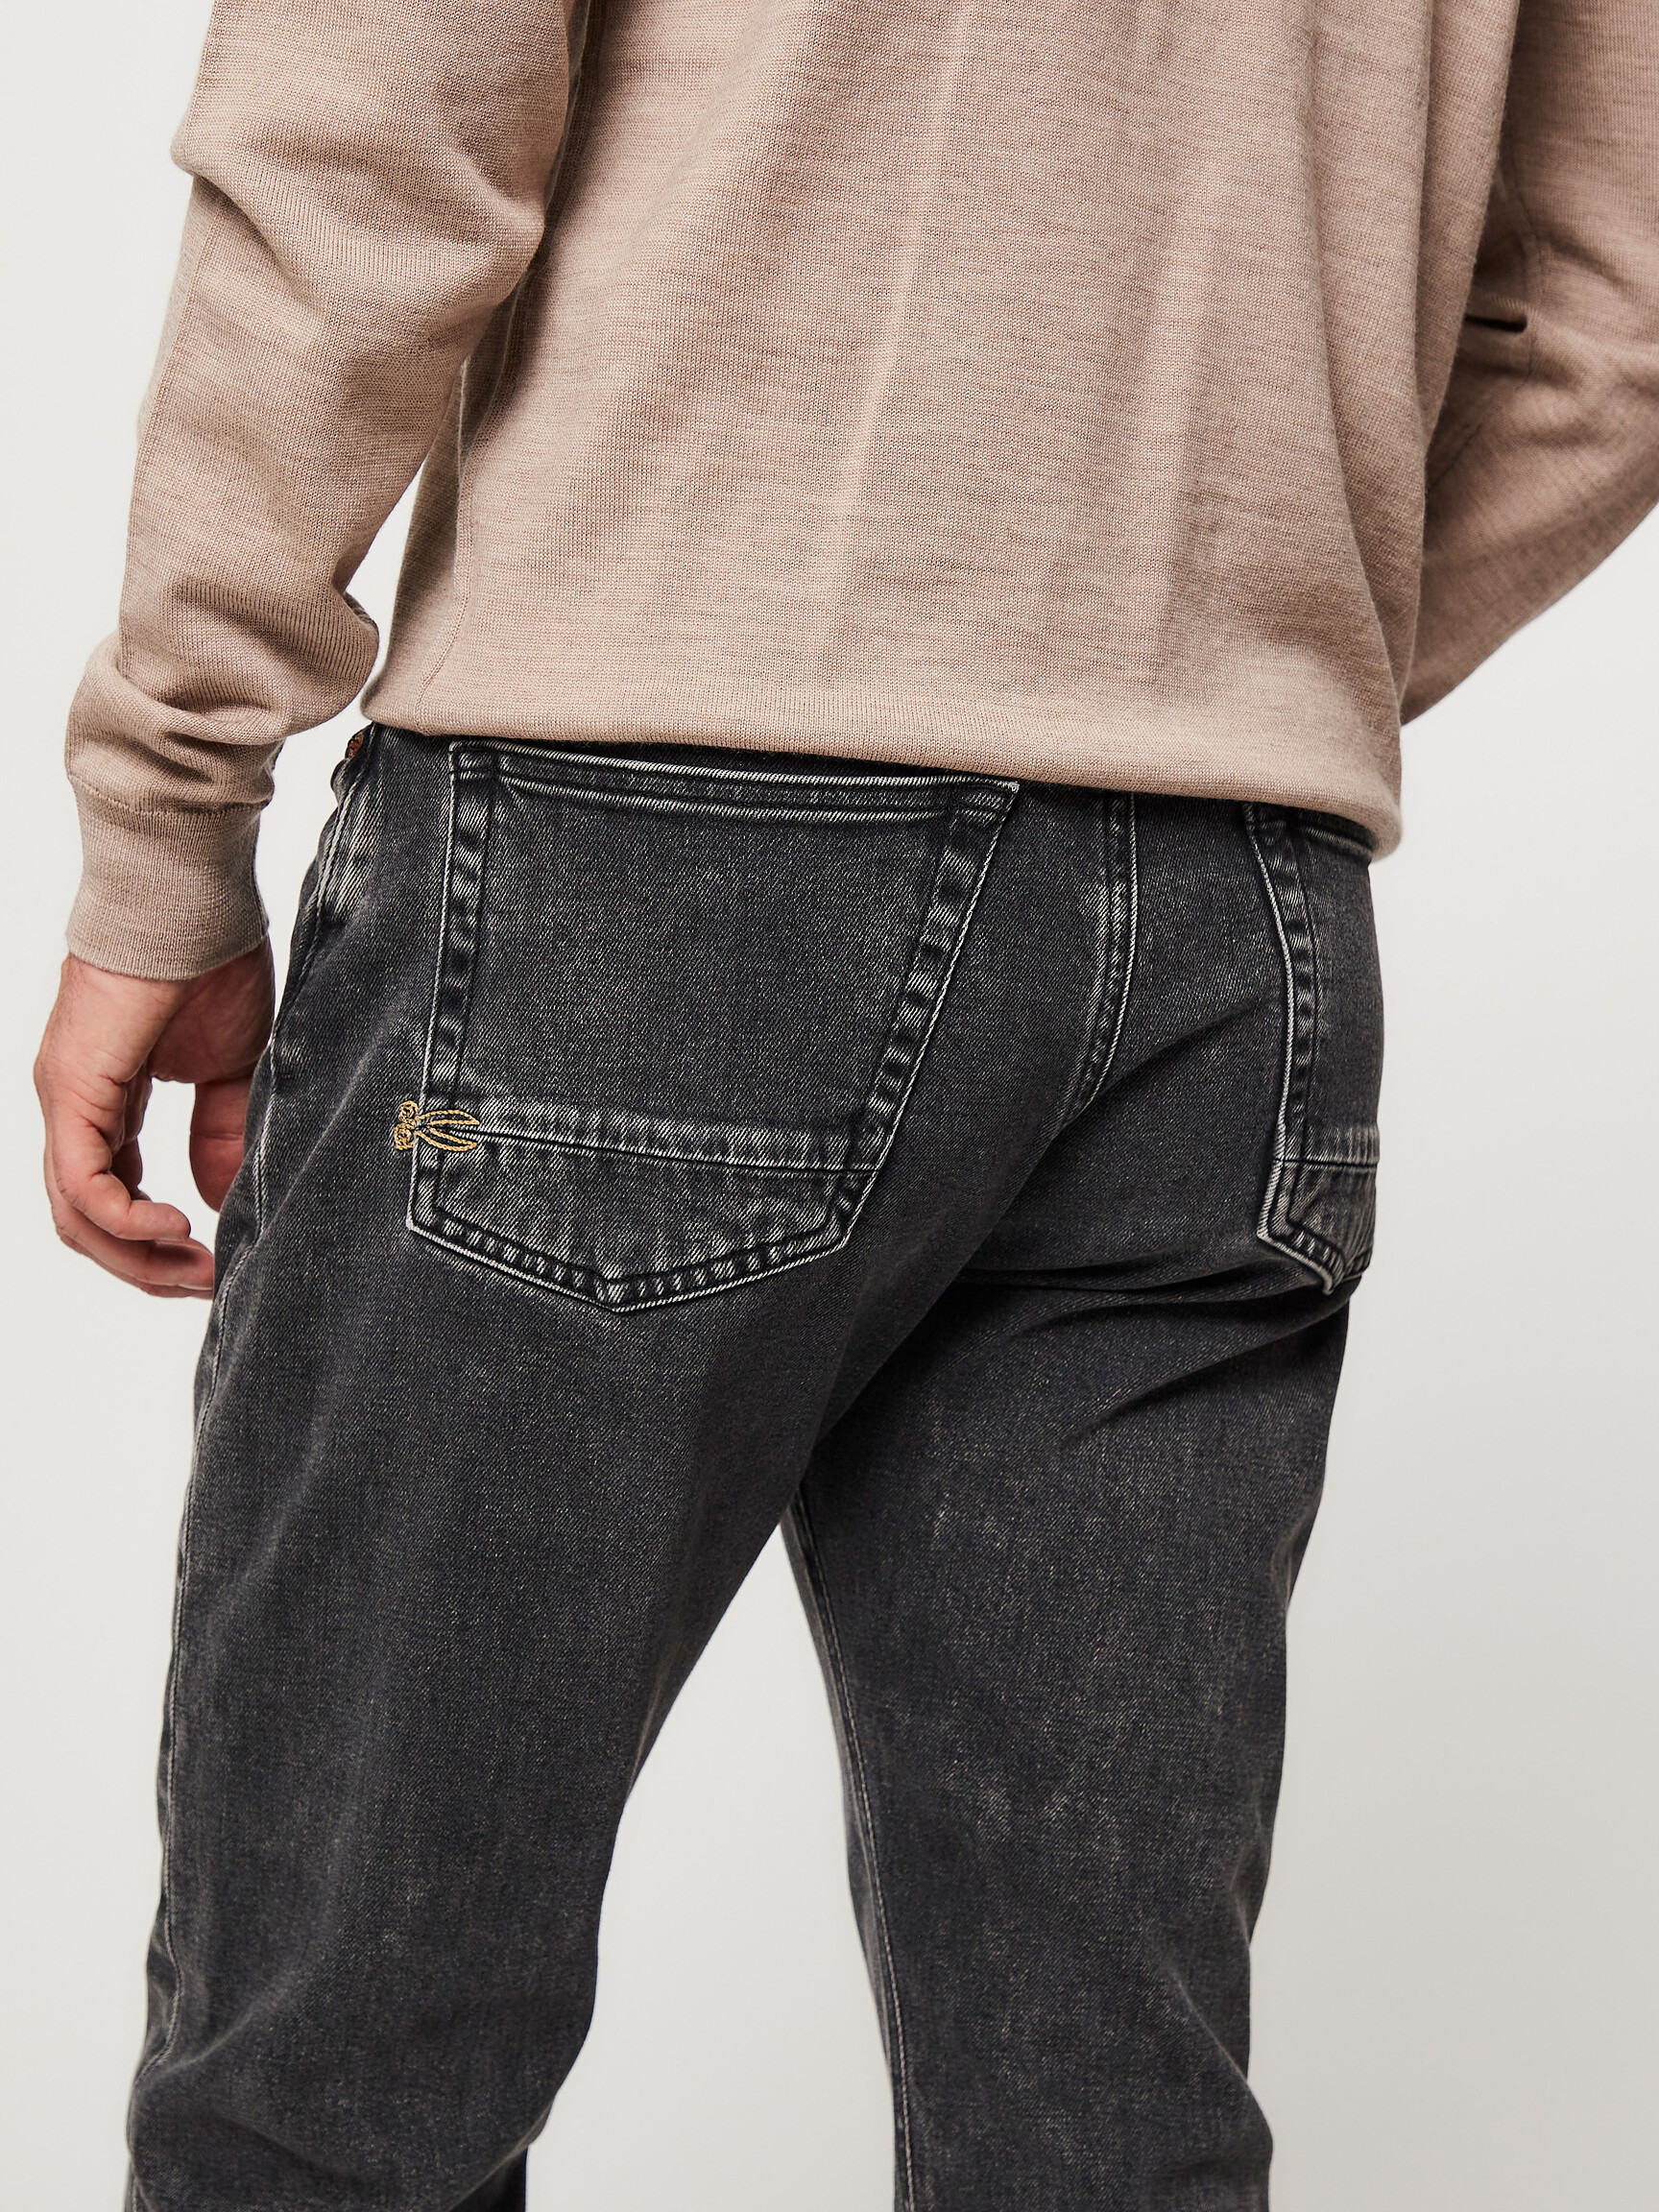 Taper, regular waist tapered fit jeans